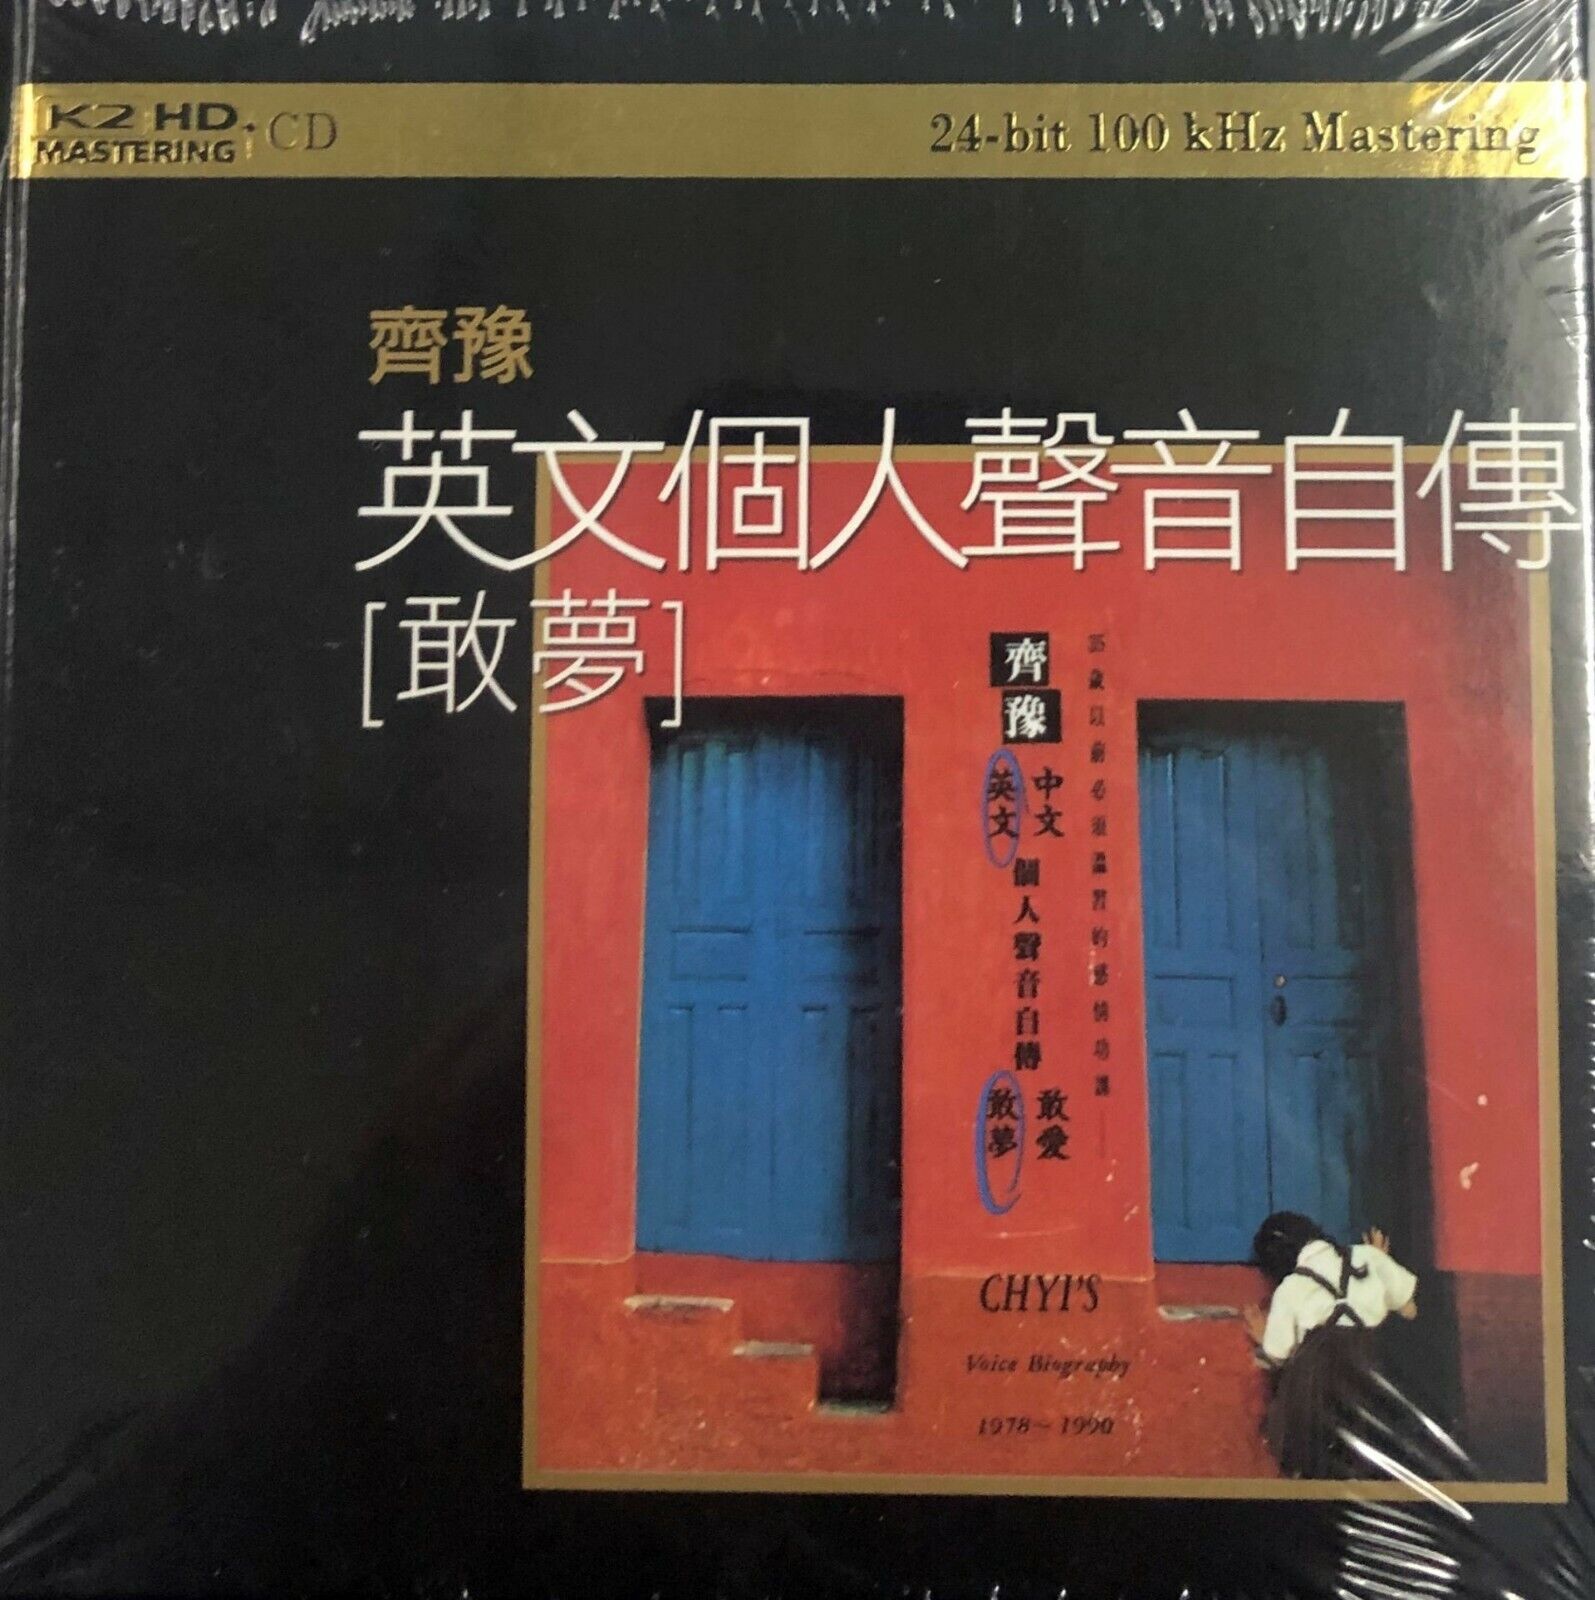 CHYI YU - 齊豫 CHYI'S VOICE BOPGRAPHY 1978-90 ENGLISH (K2HD) CD MADE IN JAPAN